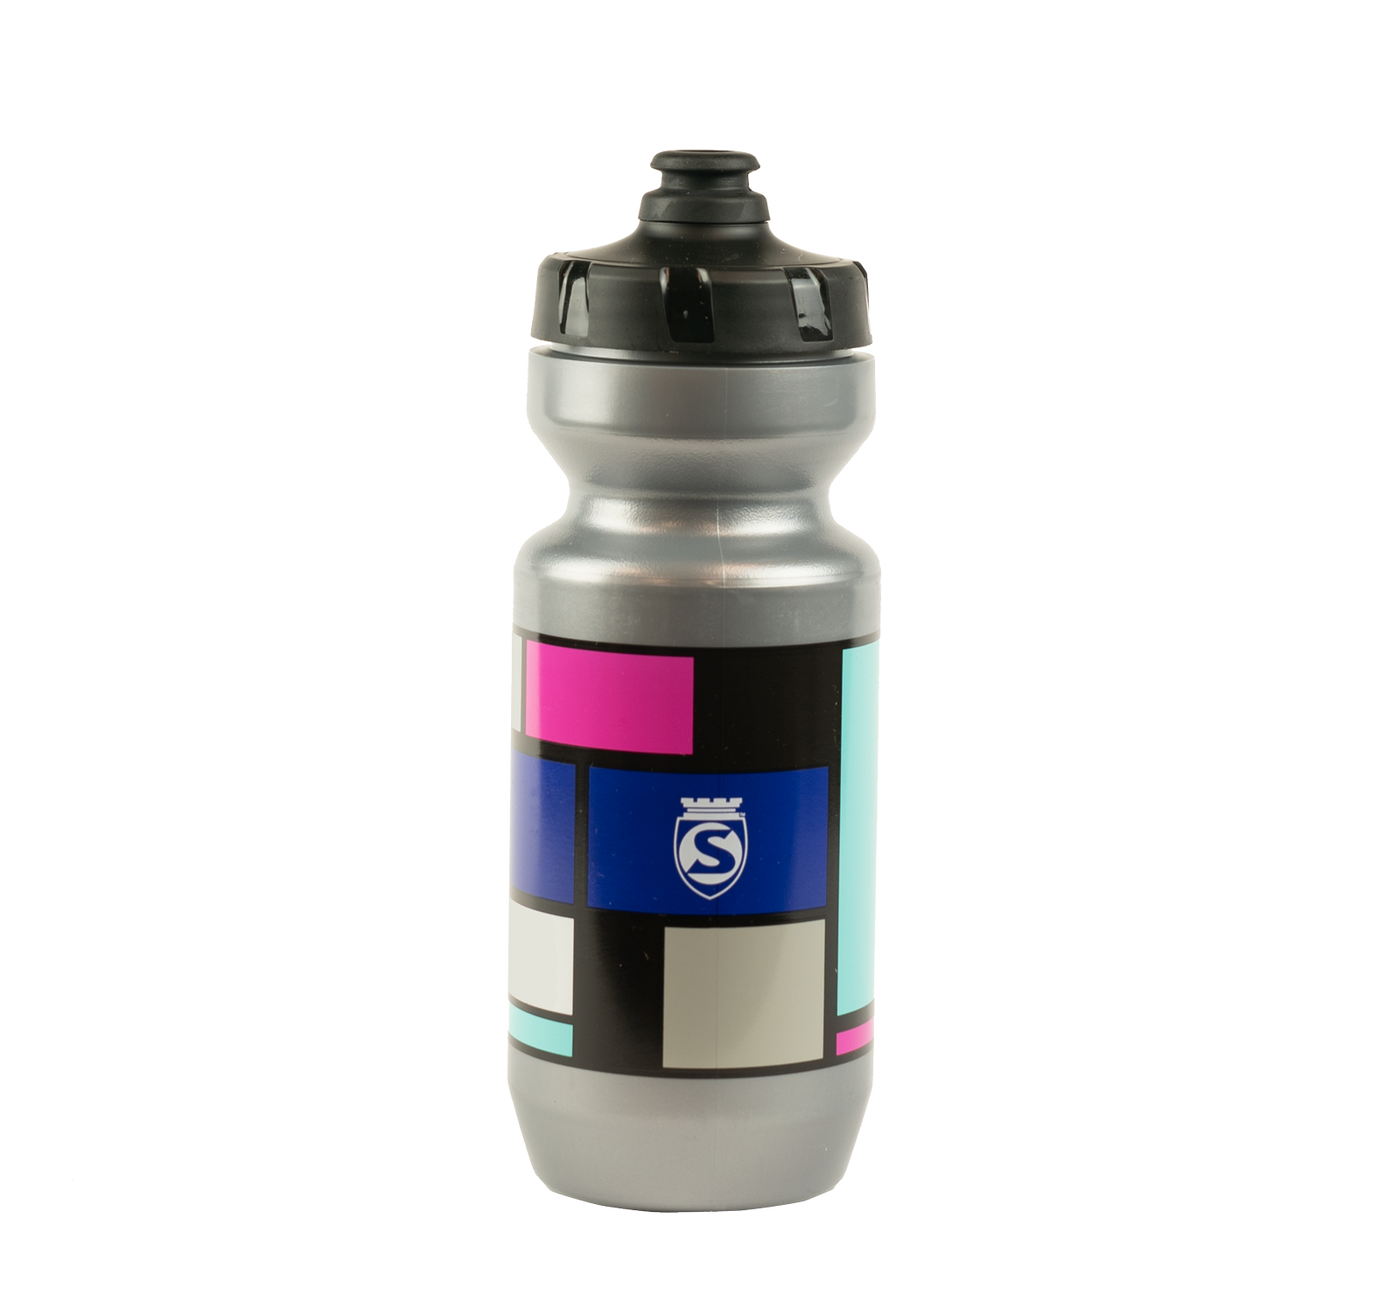 Silca Mondarin Bright Water Bottle | water bottle | bike water bottle | bike bottle | bottle for bike | water bottle for bike | water bottle for athletes | purist water bottle